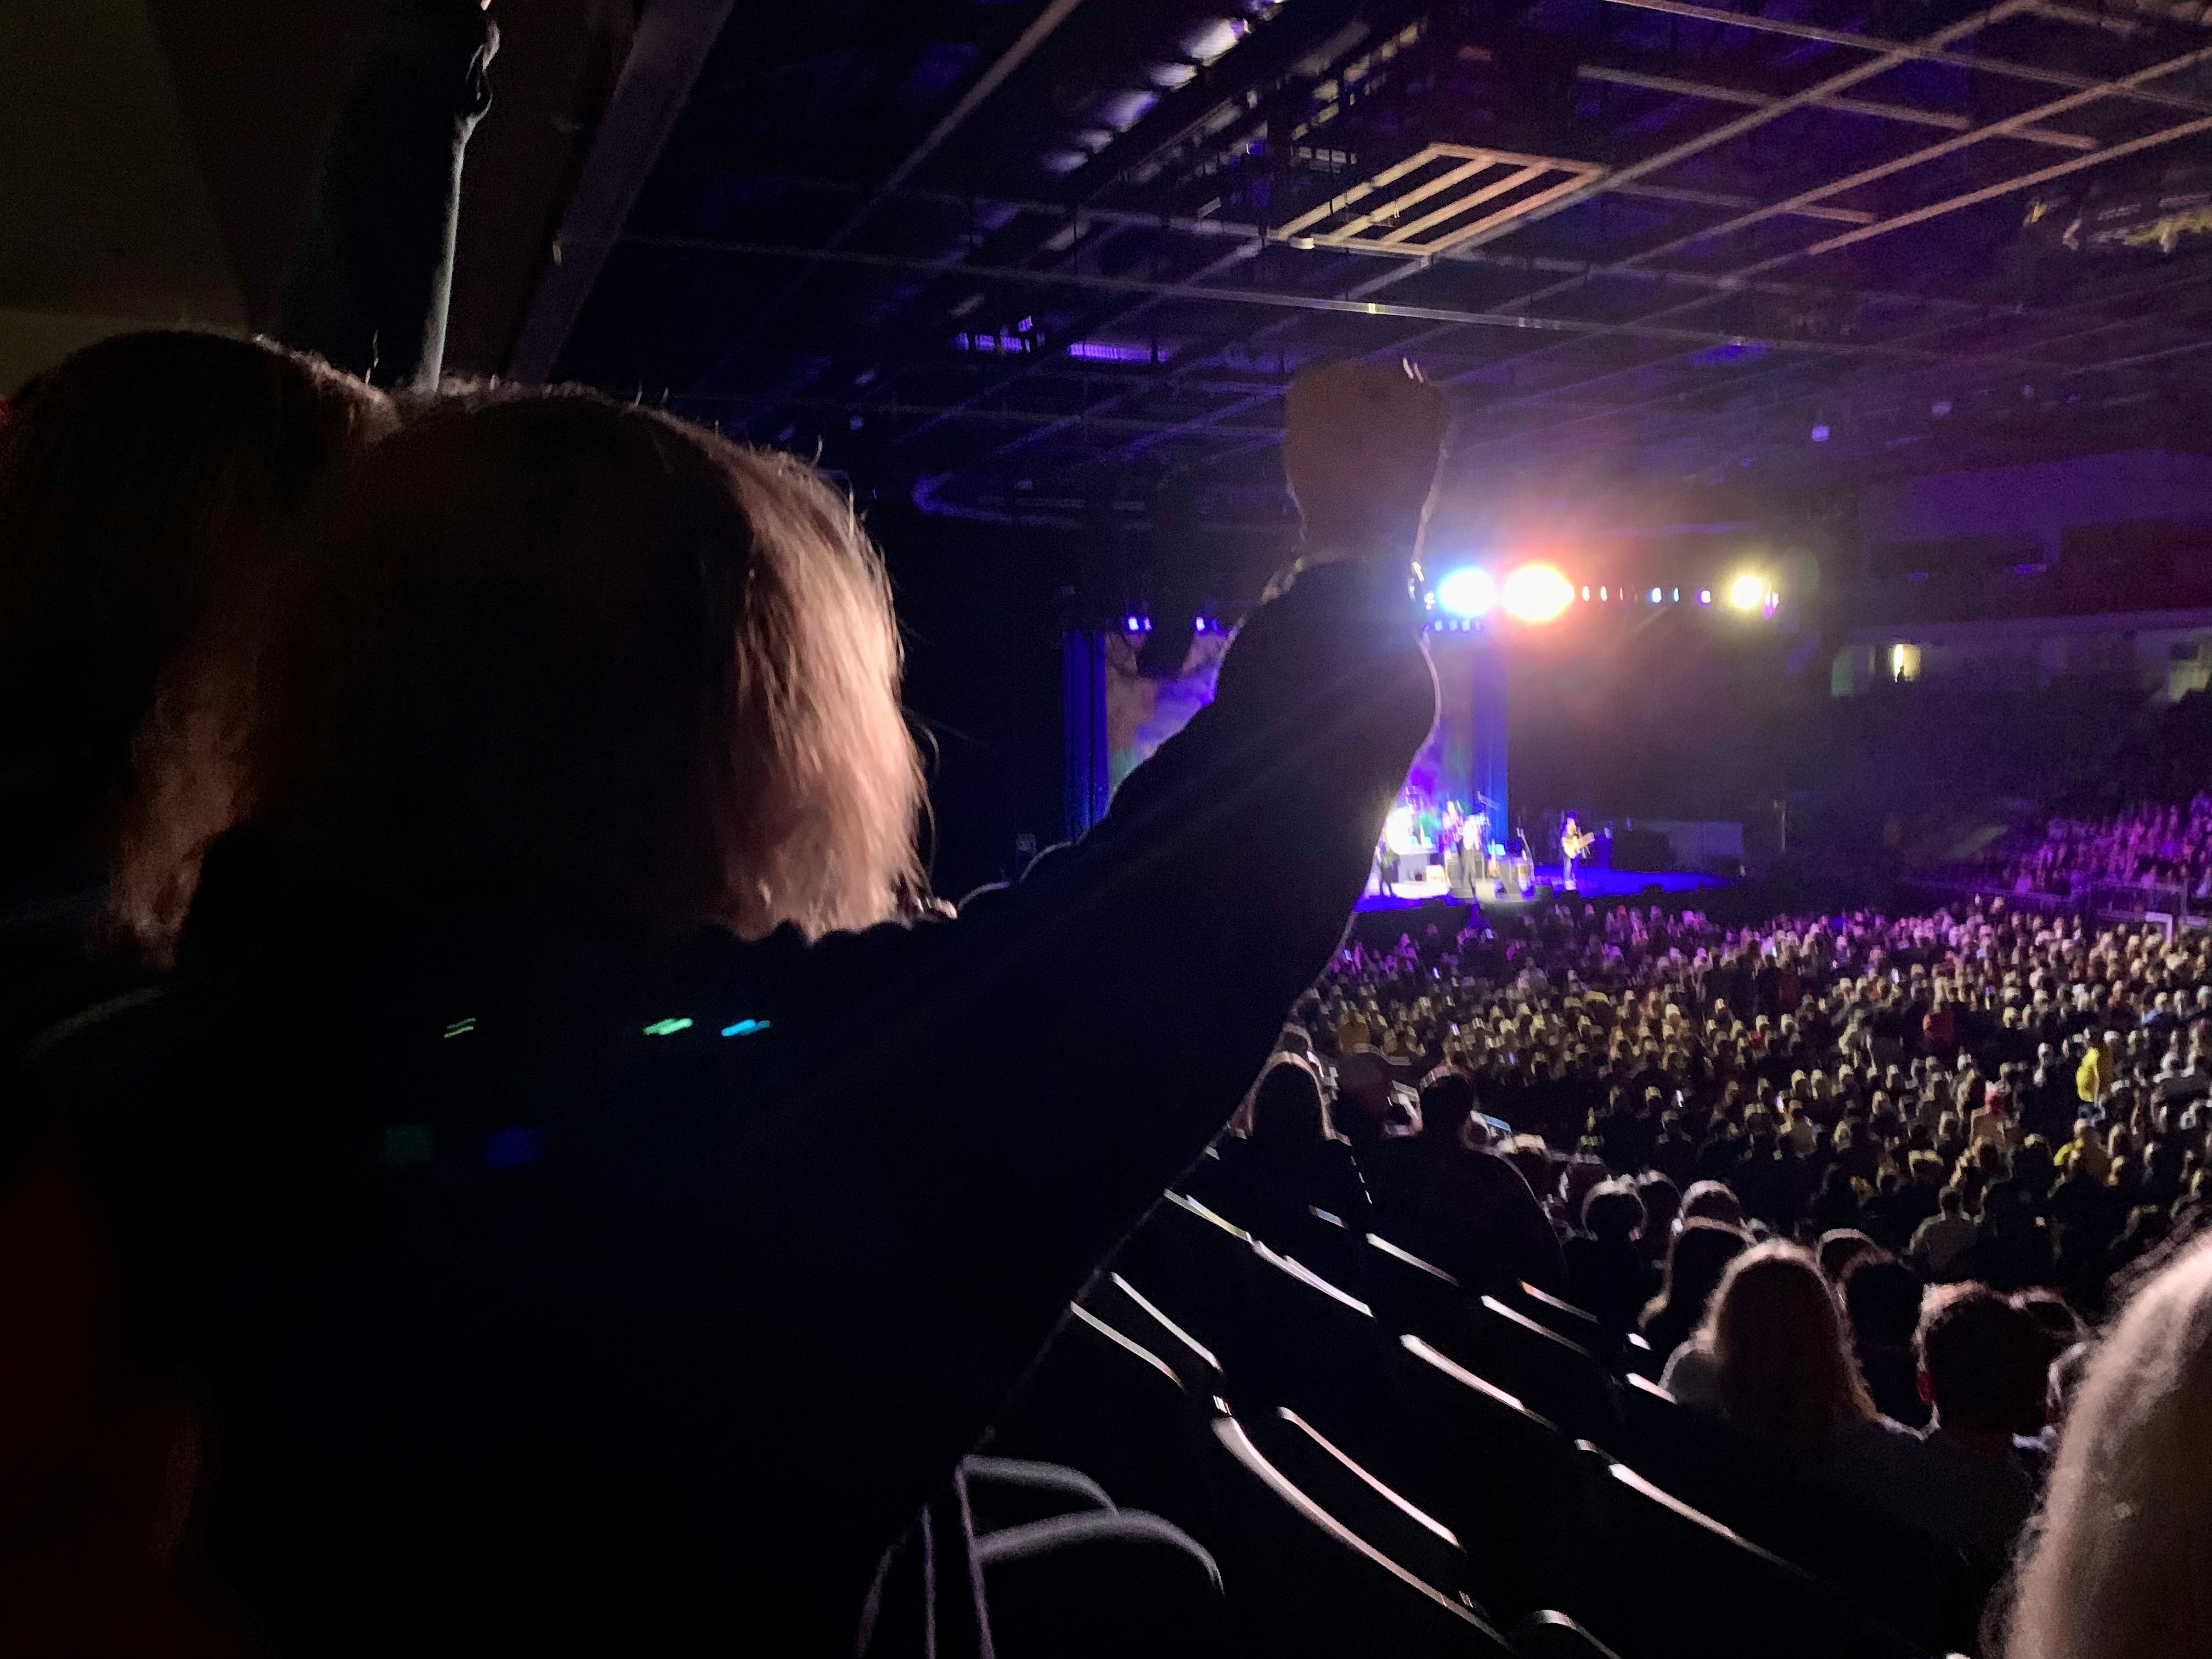 Debbie at the concert raising her hands 